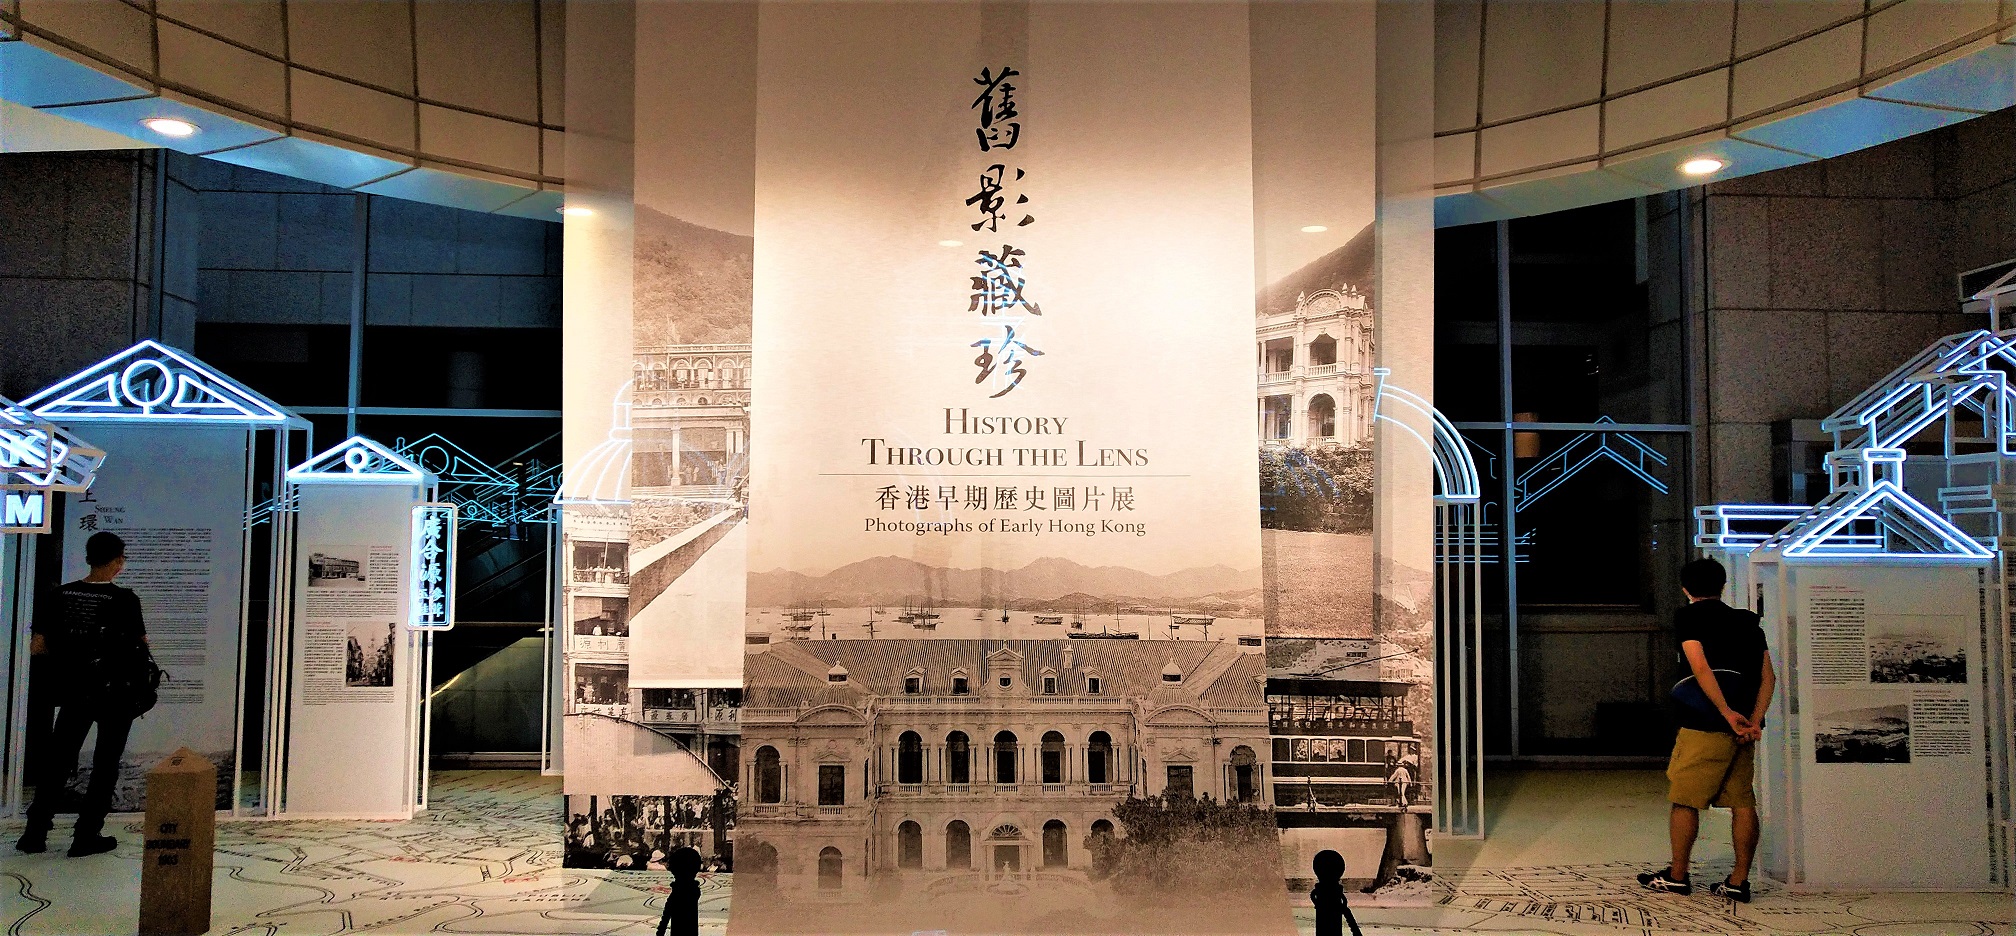 Old photo exhibition at Hong Kong Museum of History